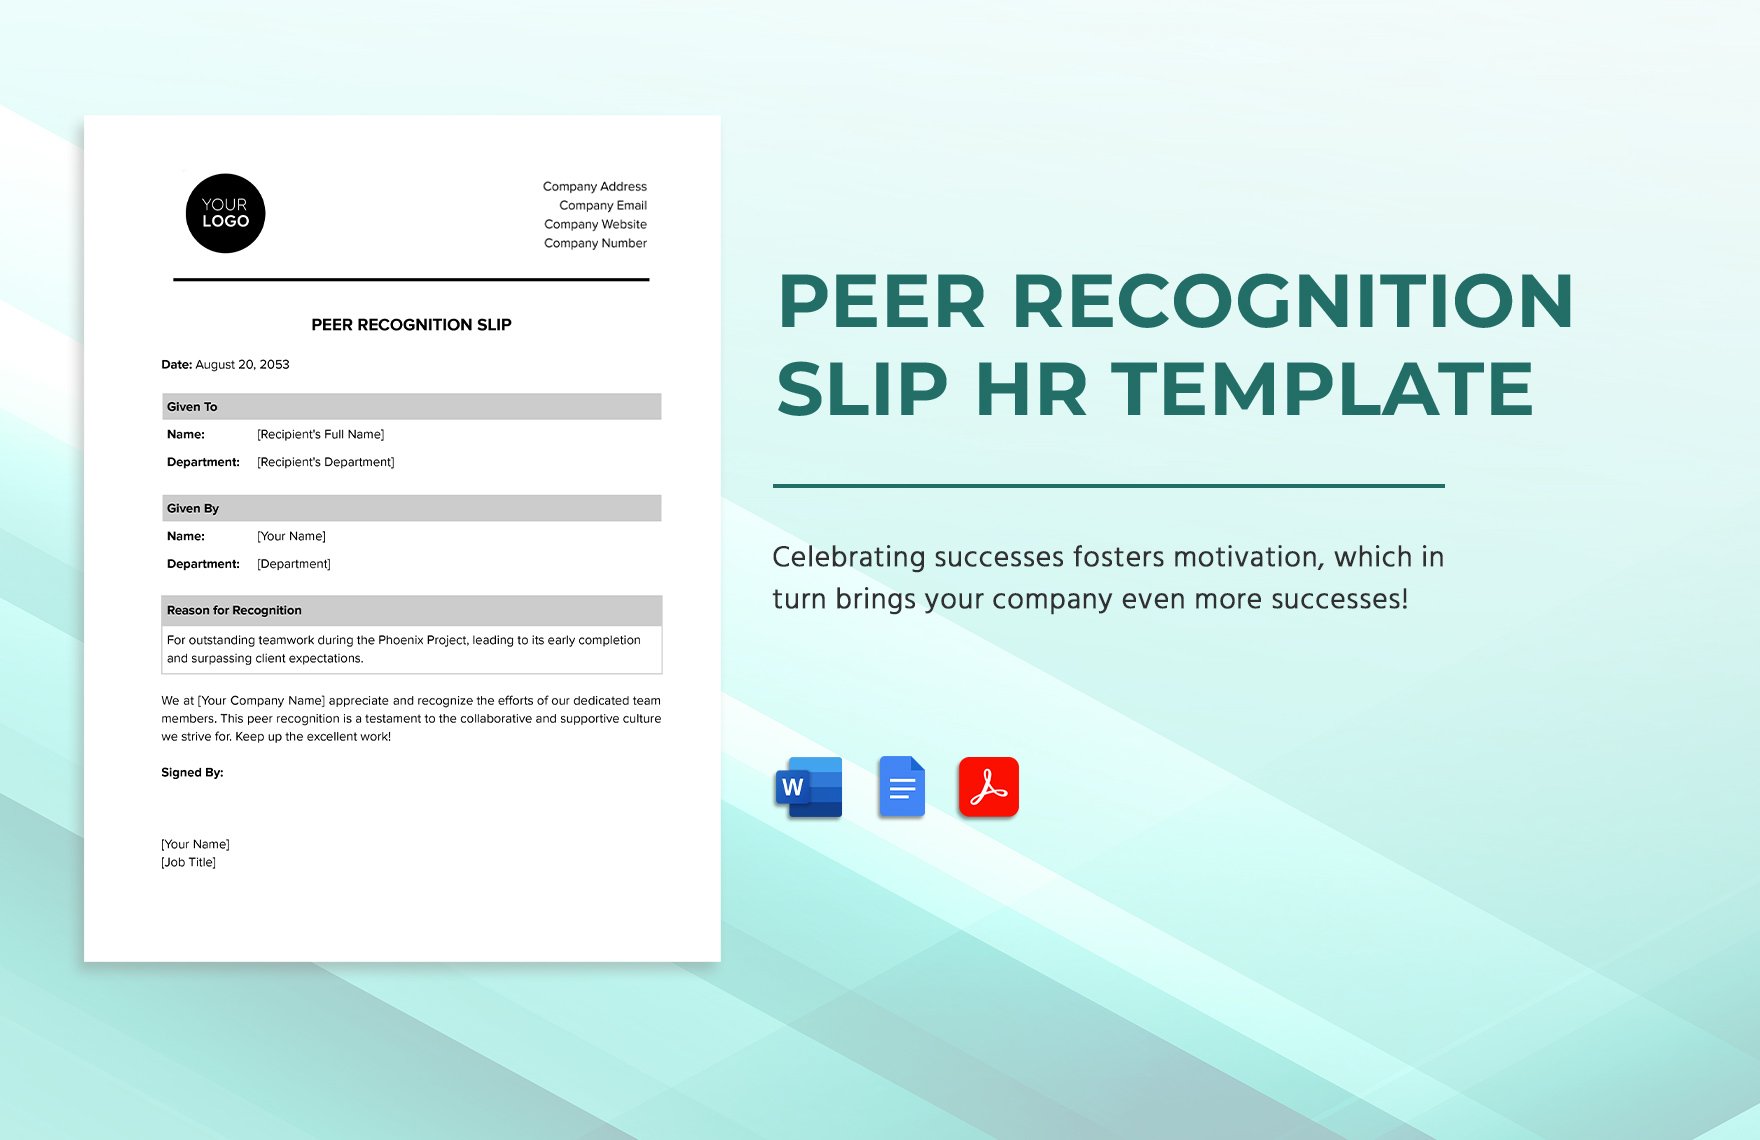 Peer Recognition Slip HR Template